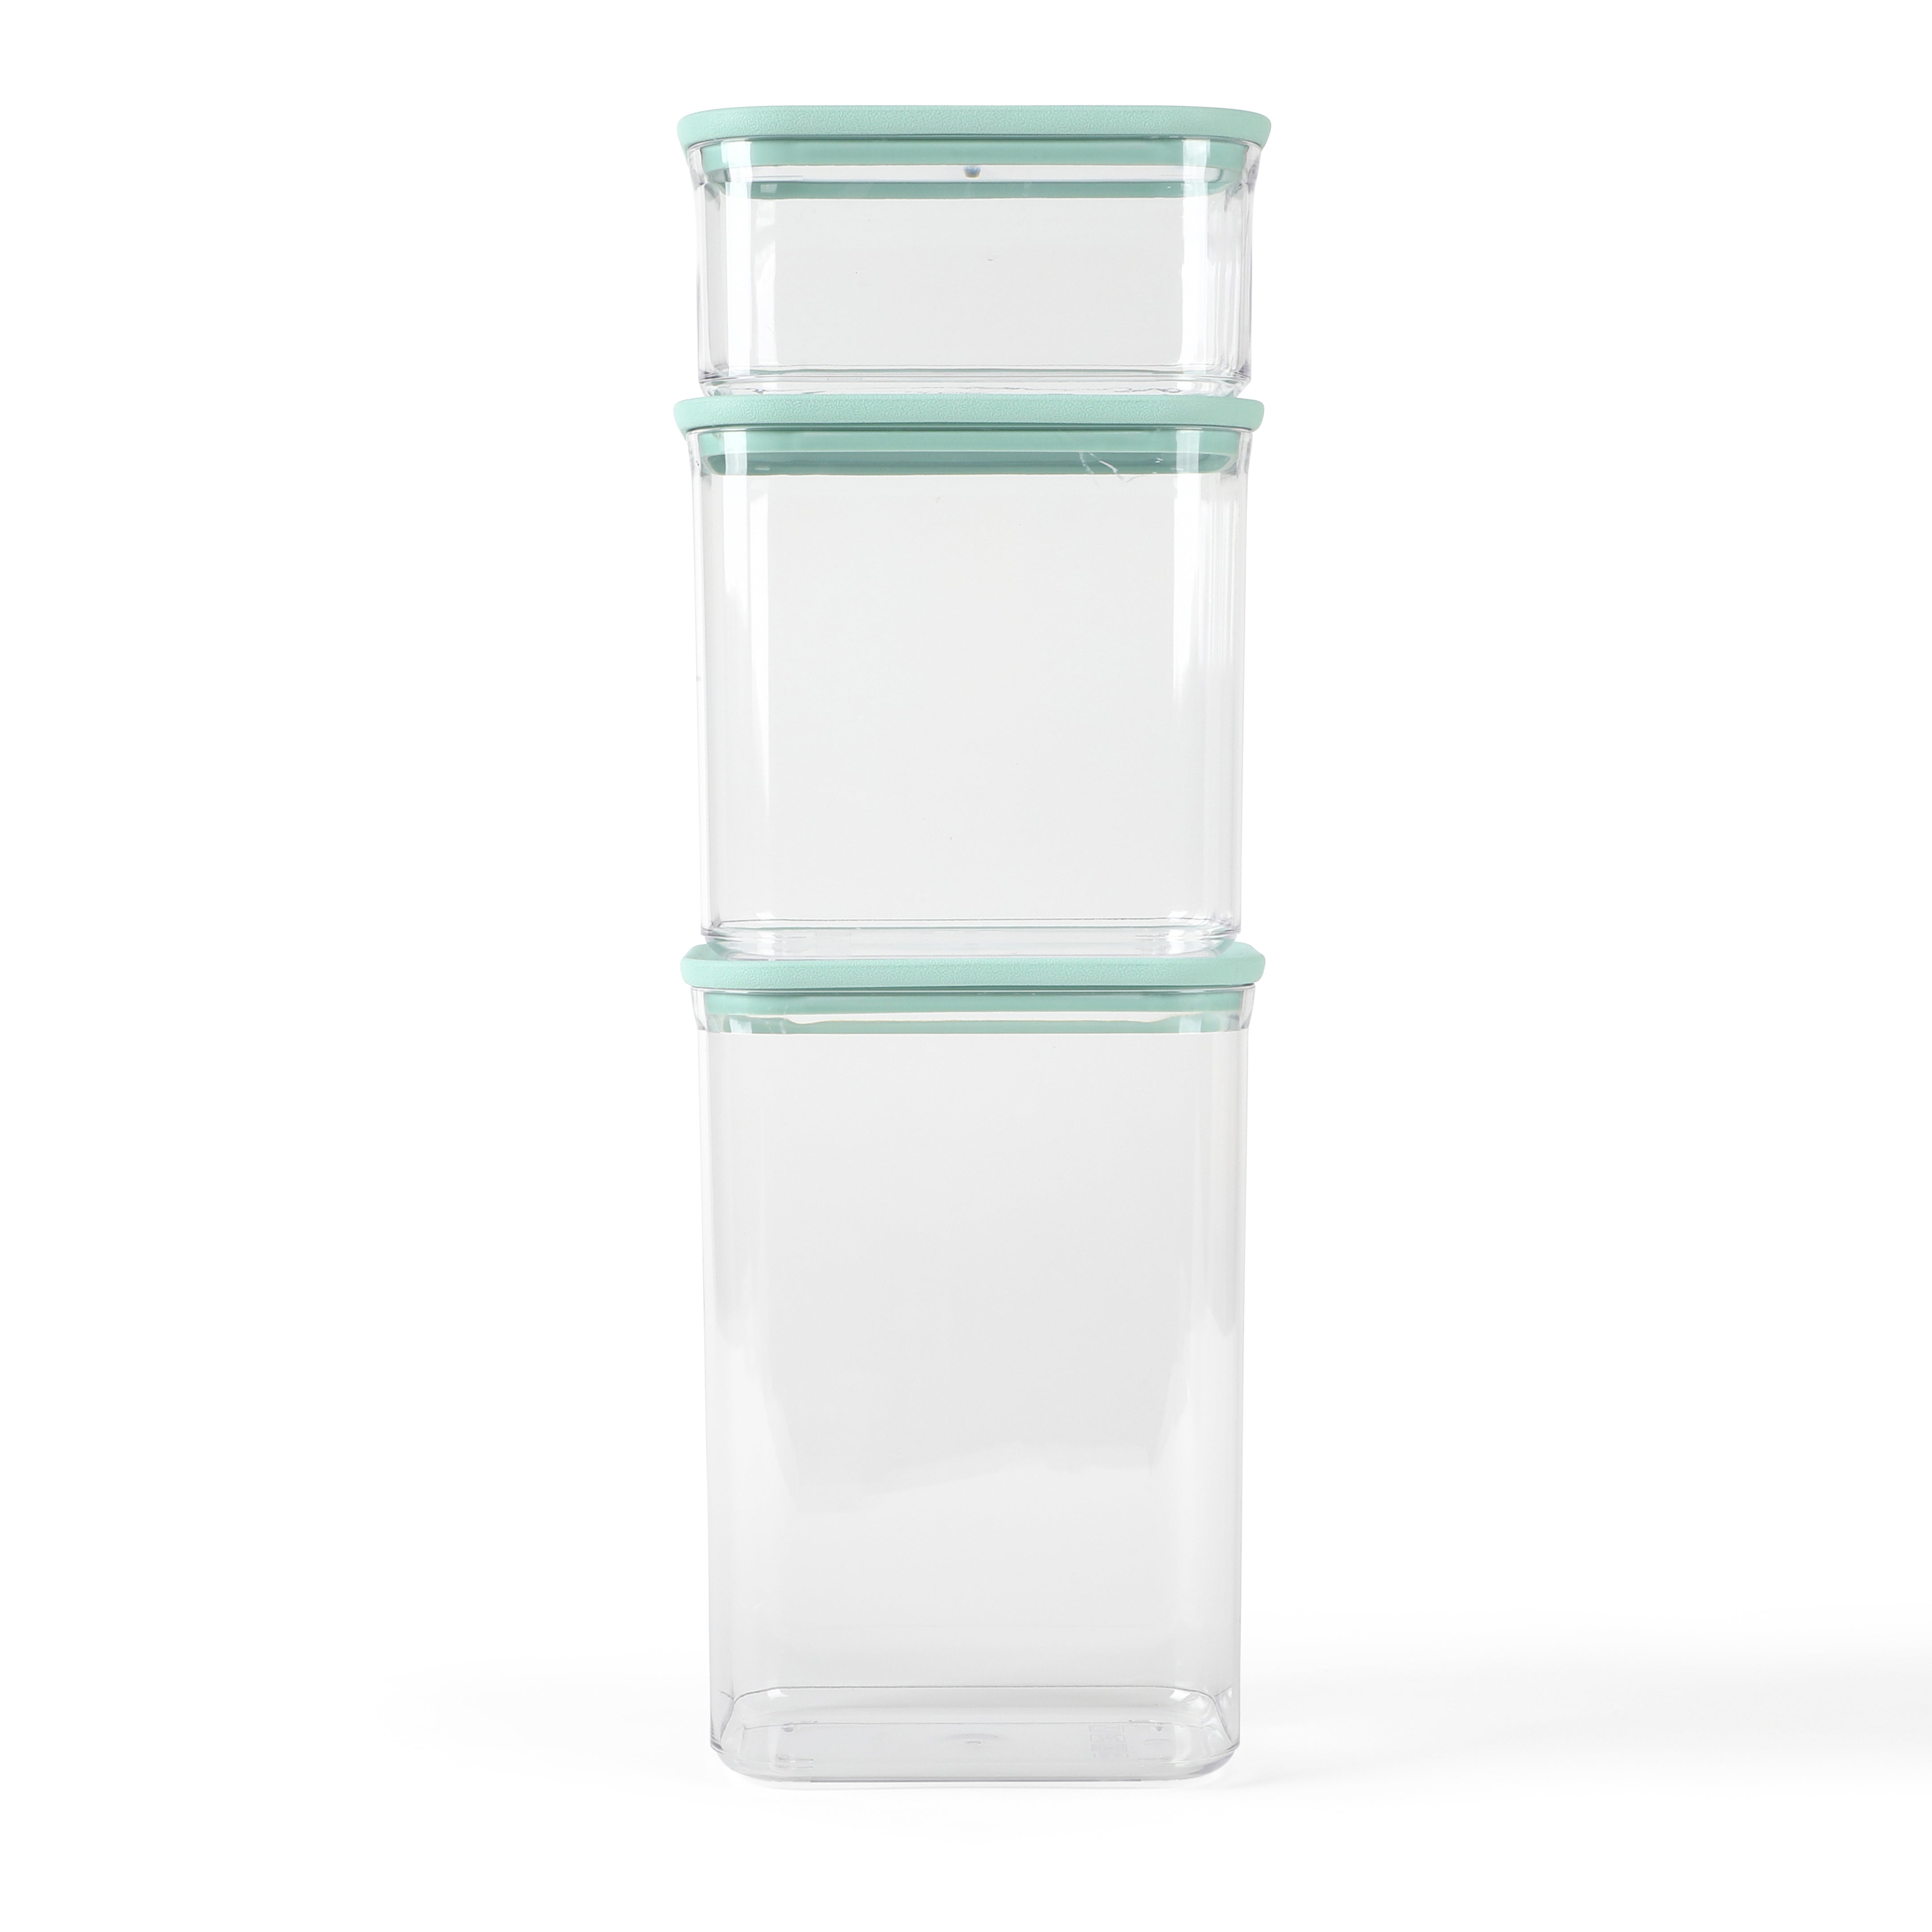 Martha Stewart Seavey 6-Piece (51.4oz, 35.5oz, 21.6oz) Square Borosilicate Glass Storage Container Set w/ Lids